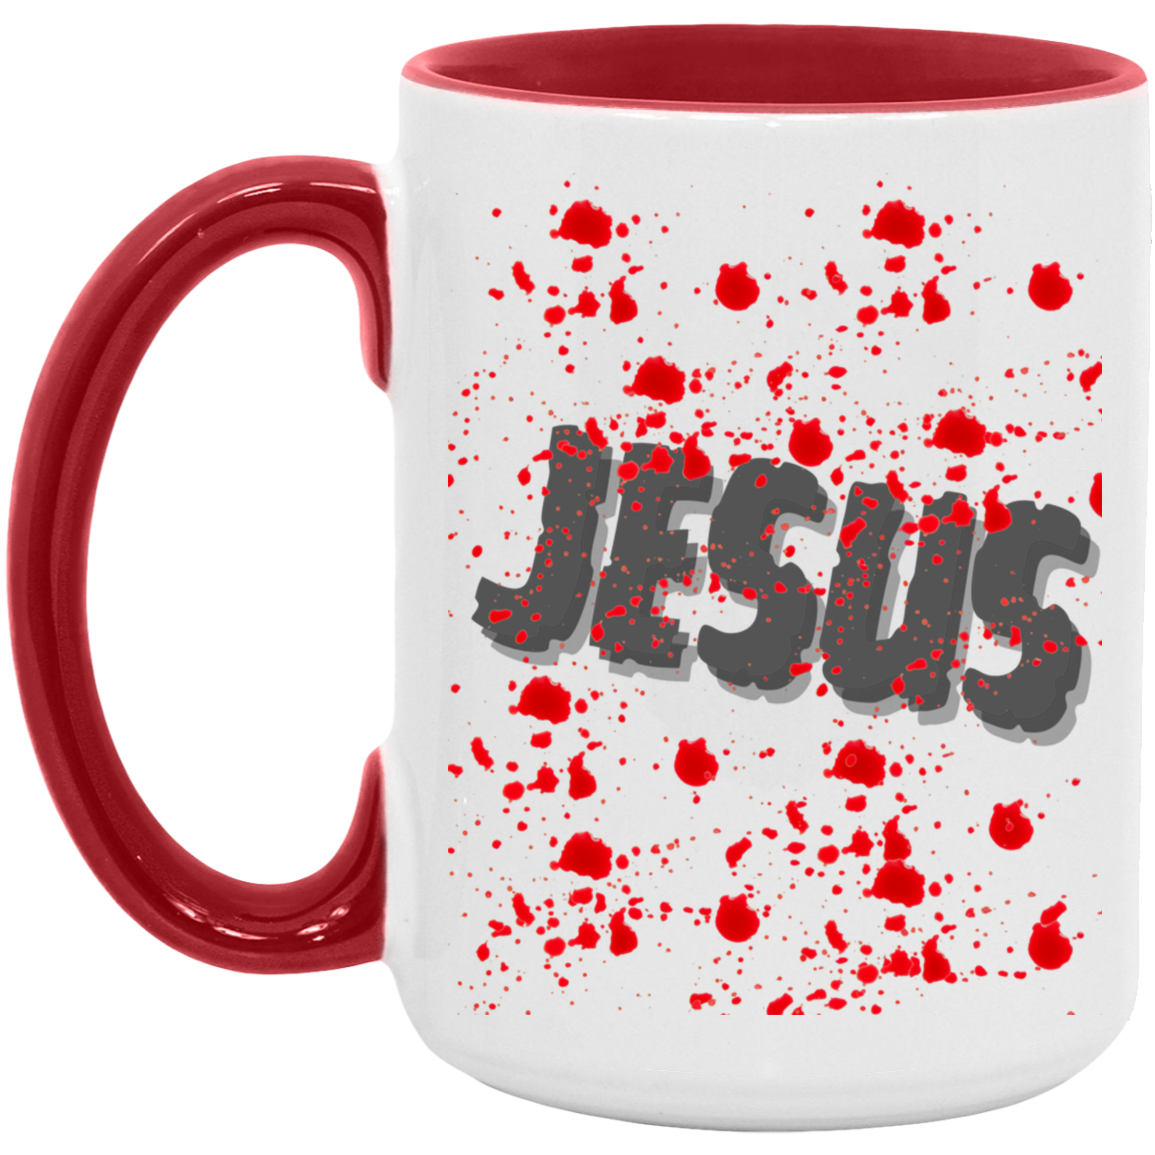 Blood of Jesus Accent Mug